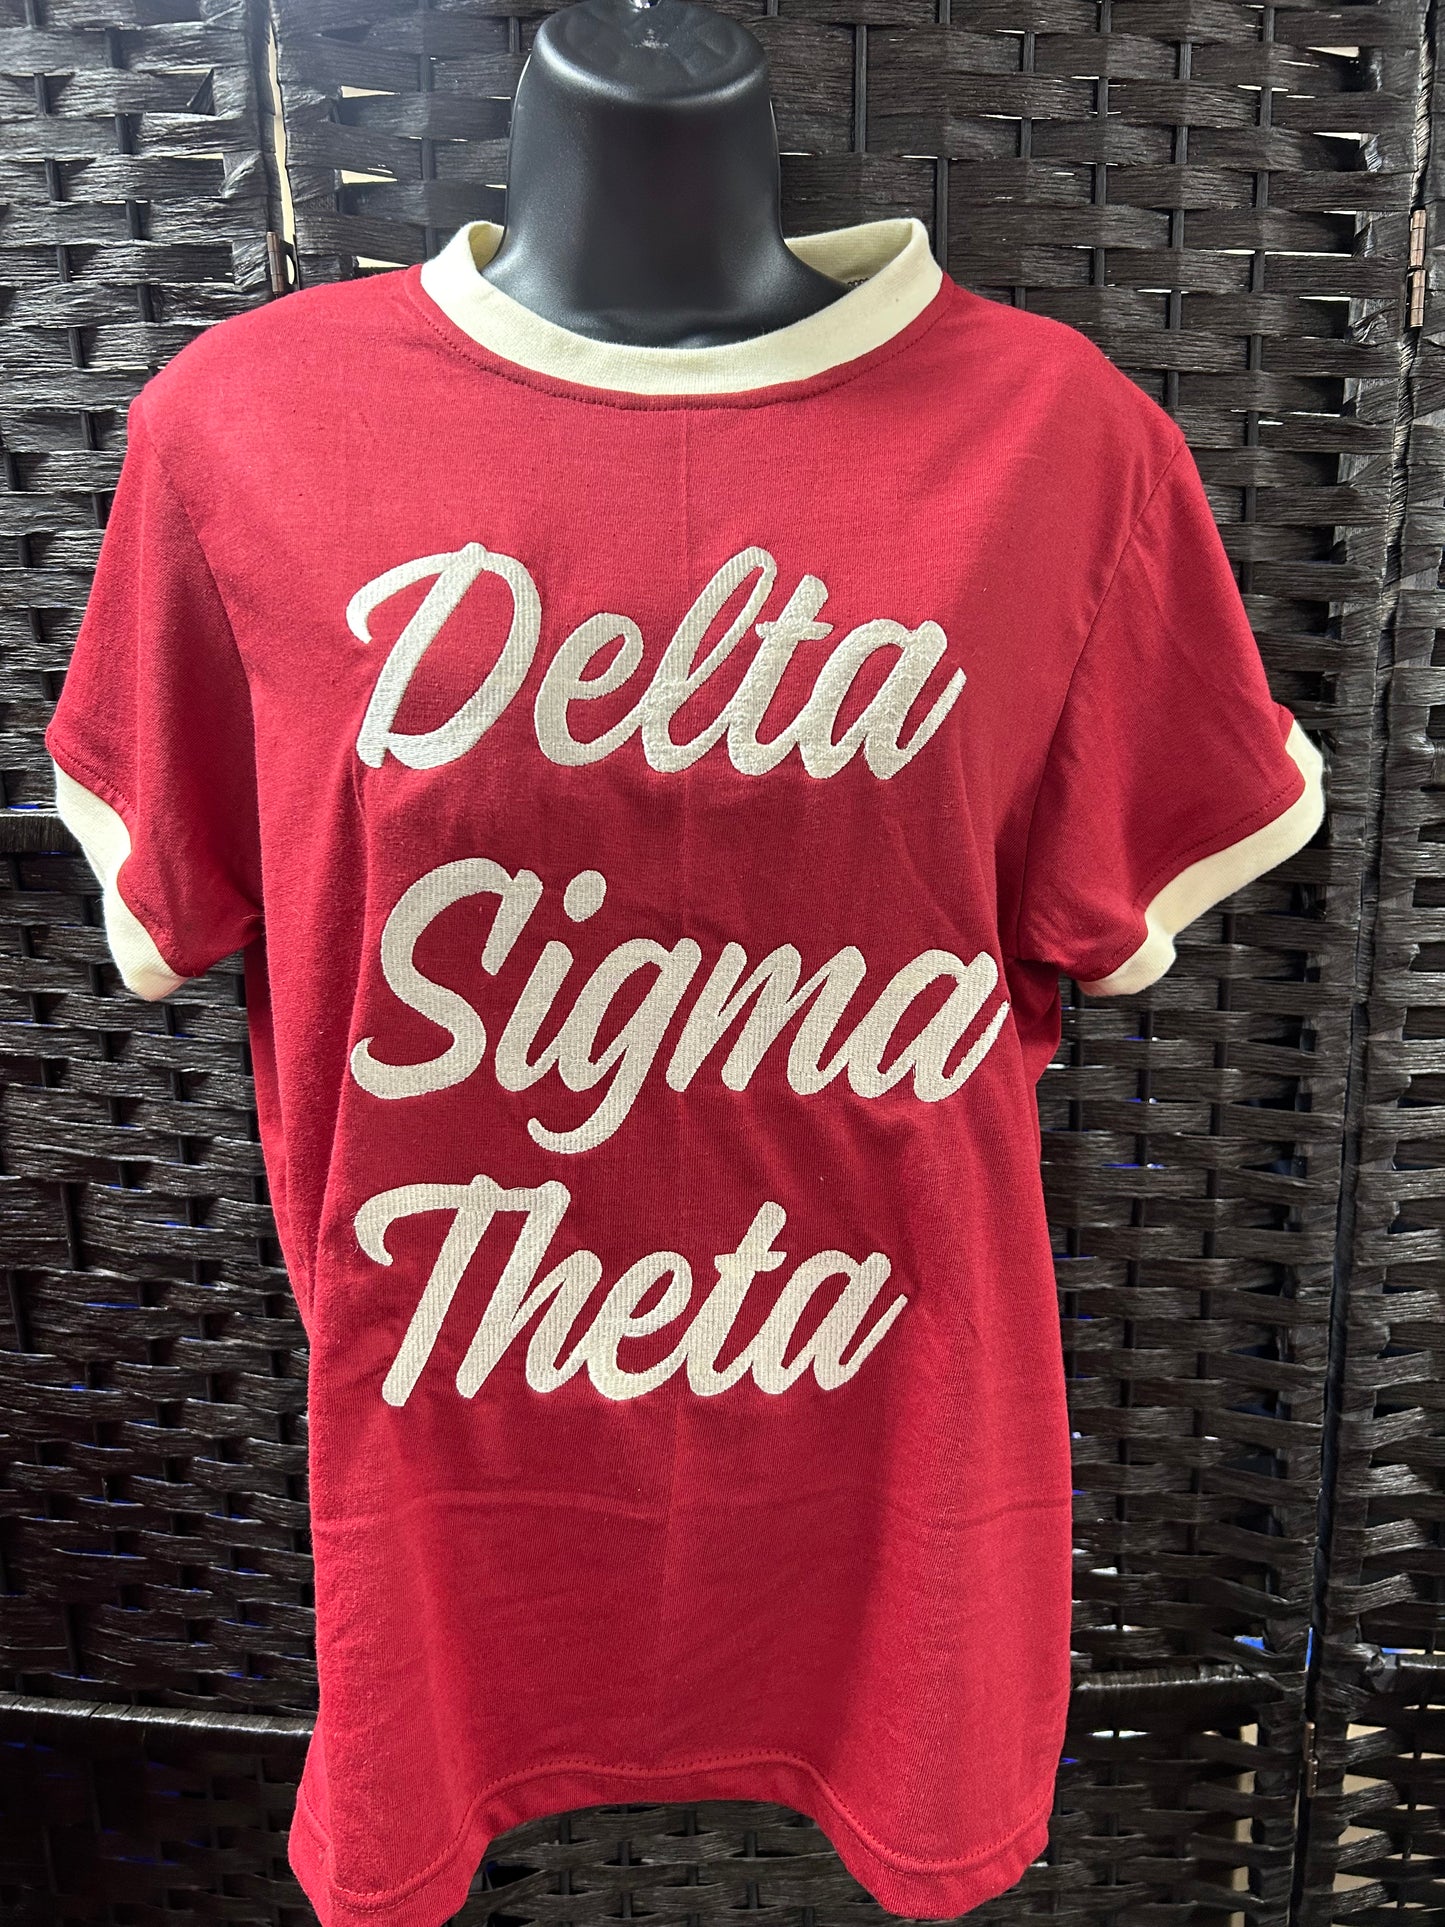 Delta Sigma Theta premium embroidered T shirt